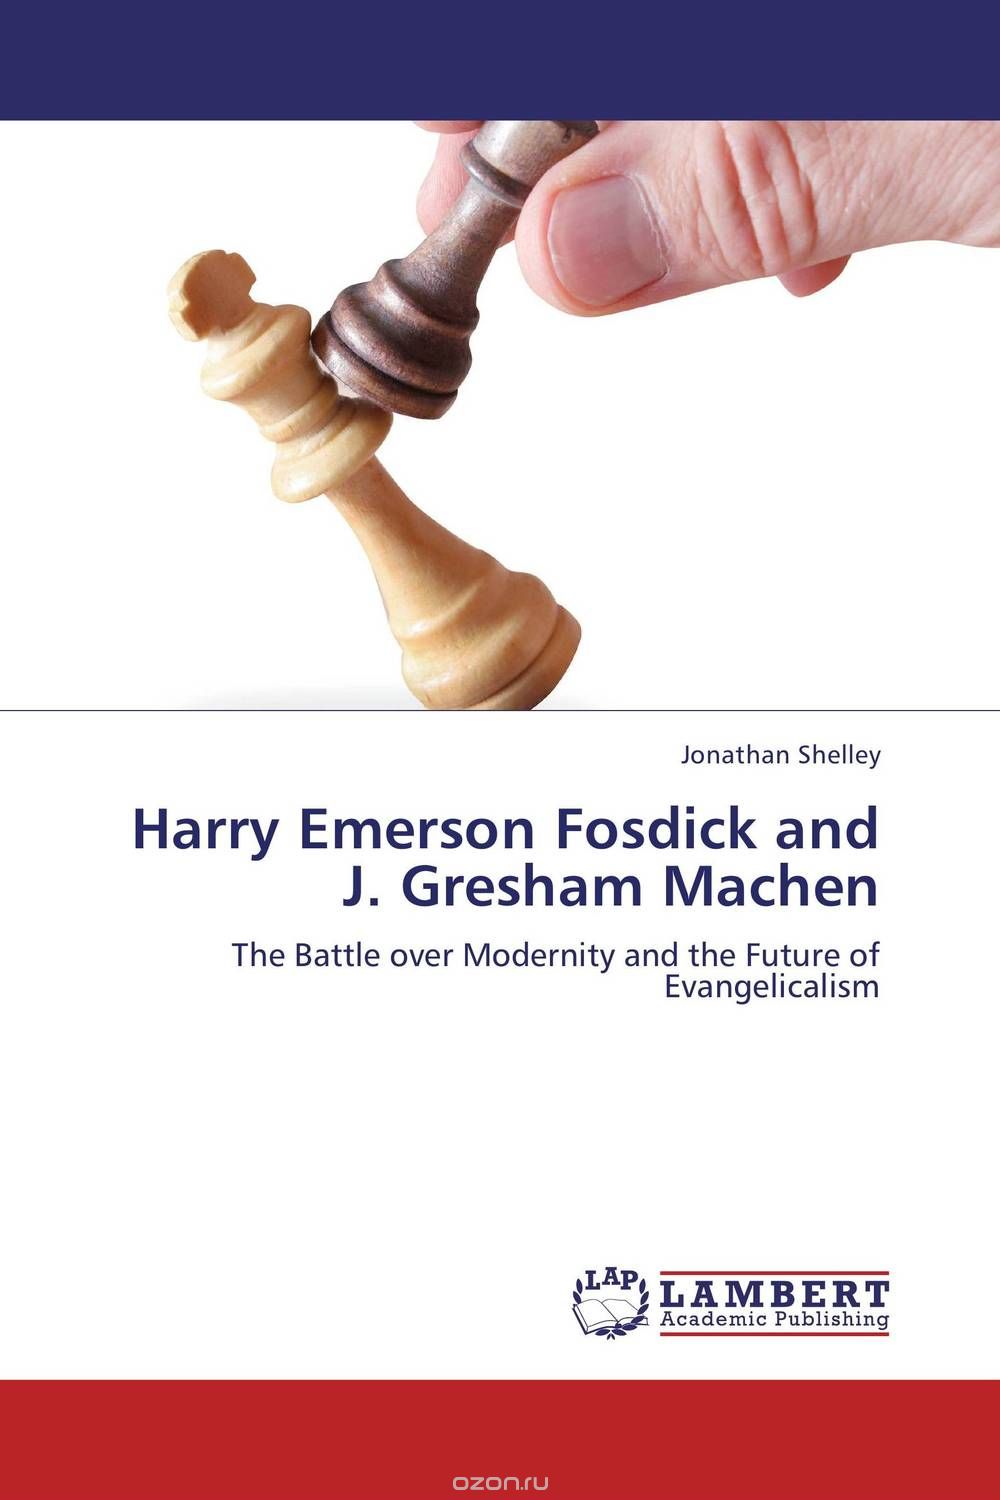 Скачать книгу "Harry Emerson Fosdick and J. Gresham Machen"